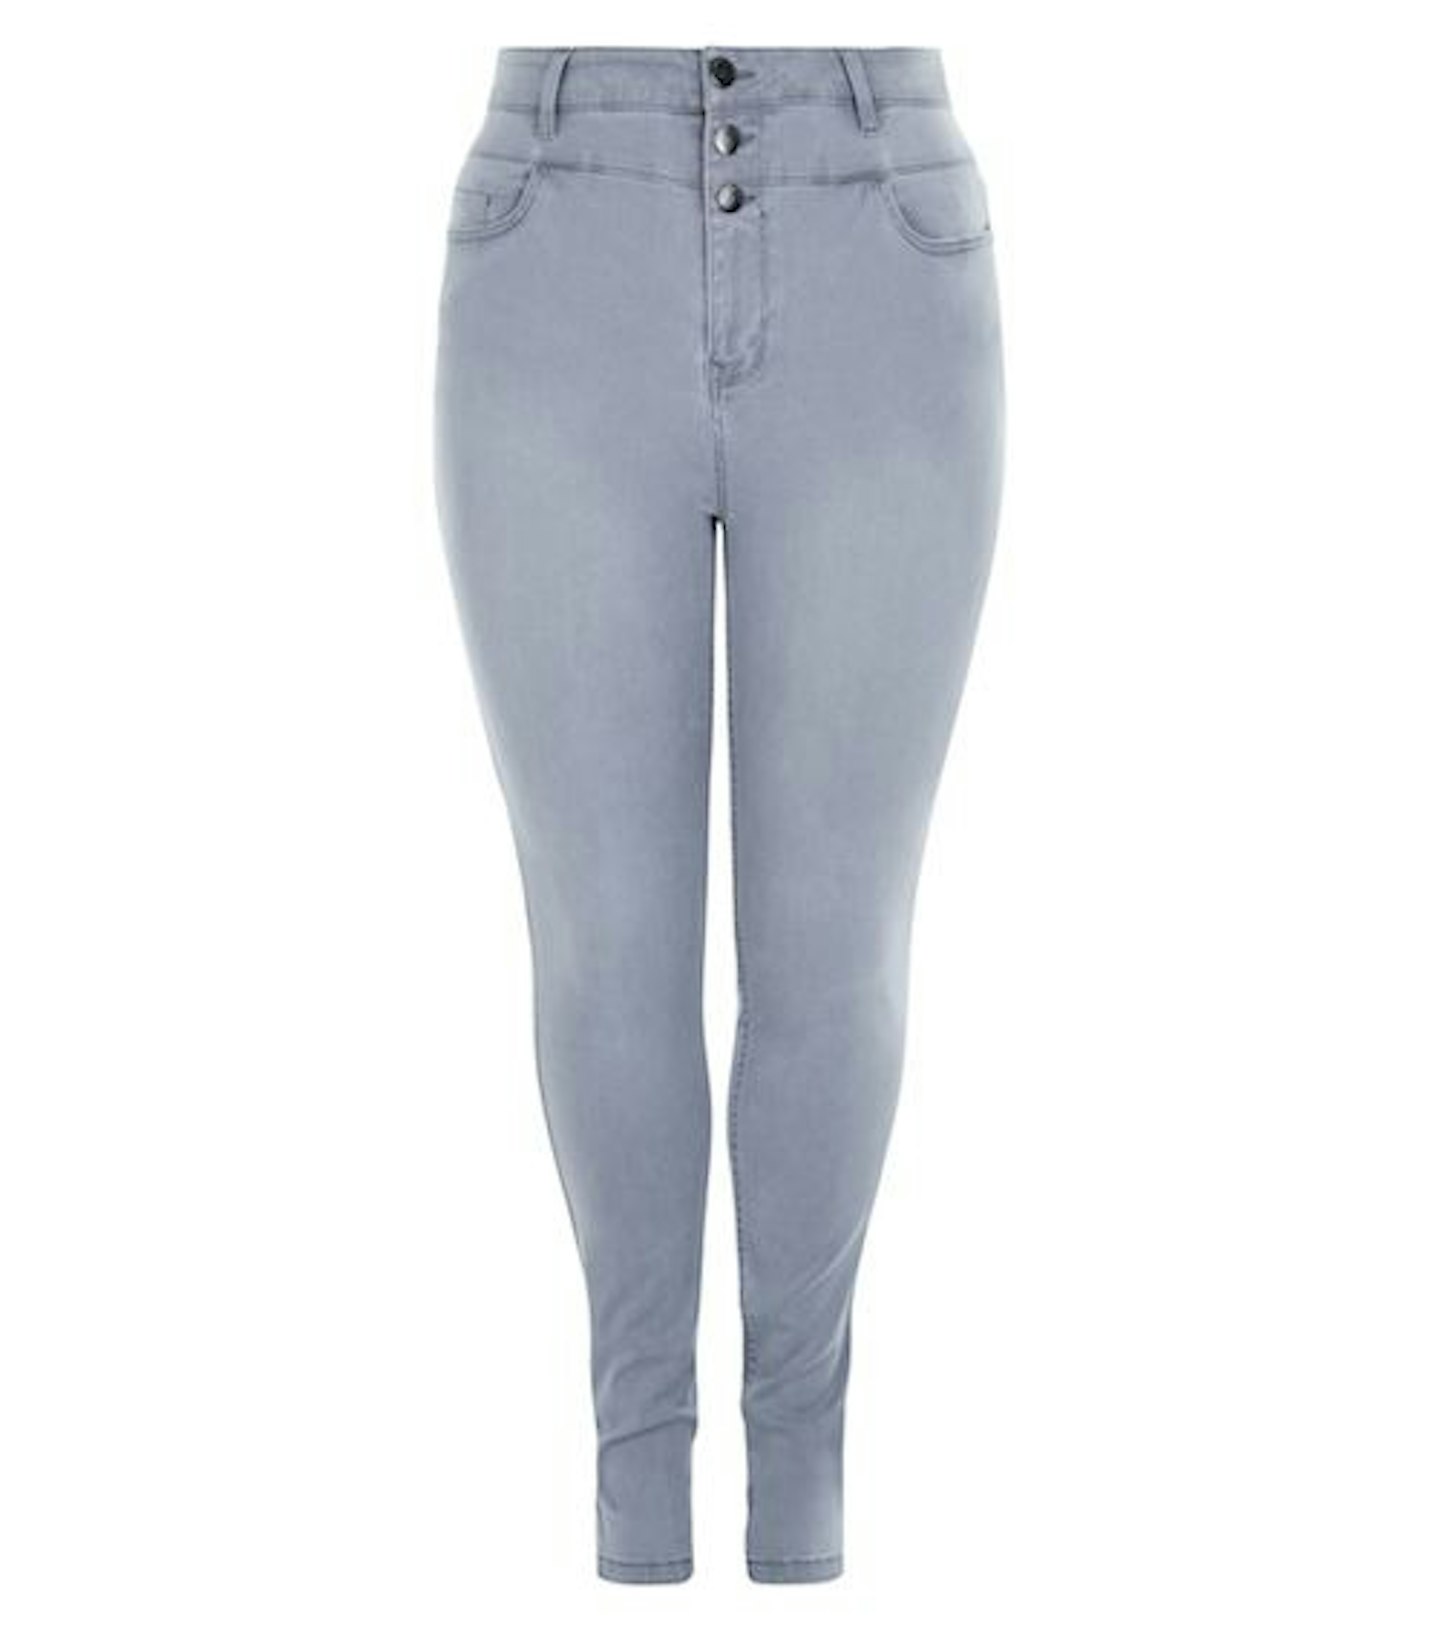 Grey jeans £24.99